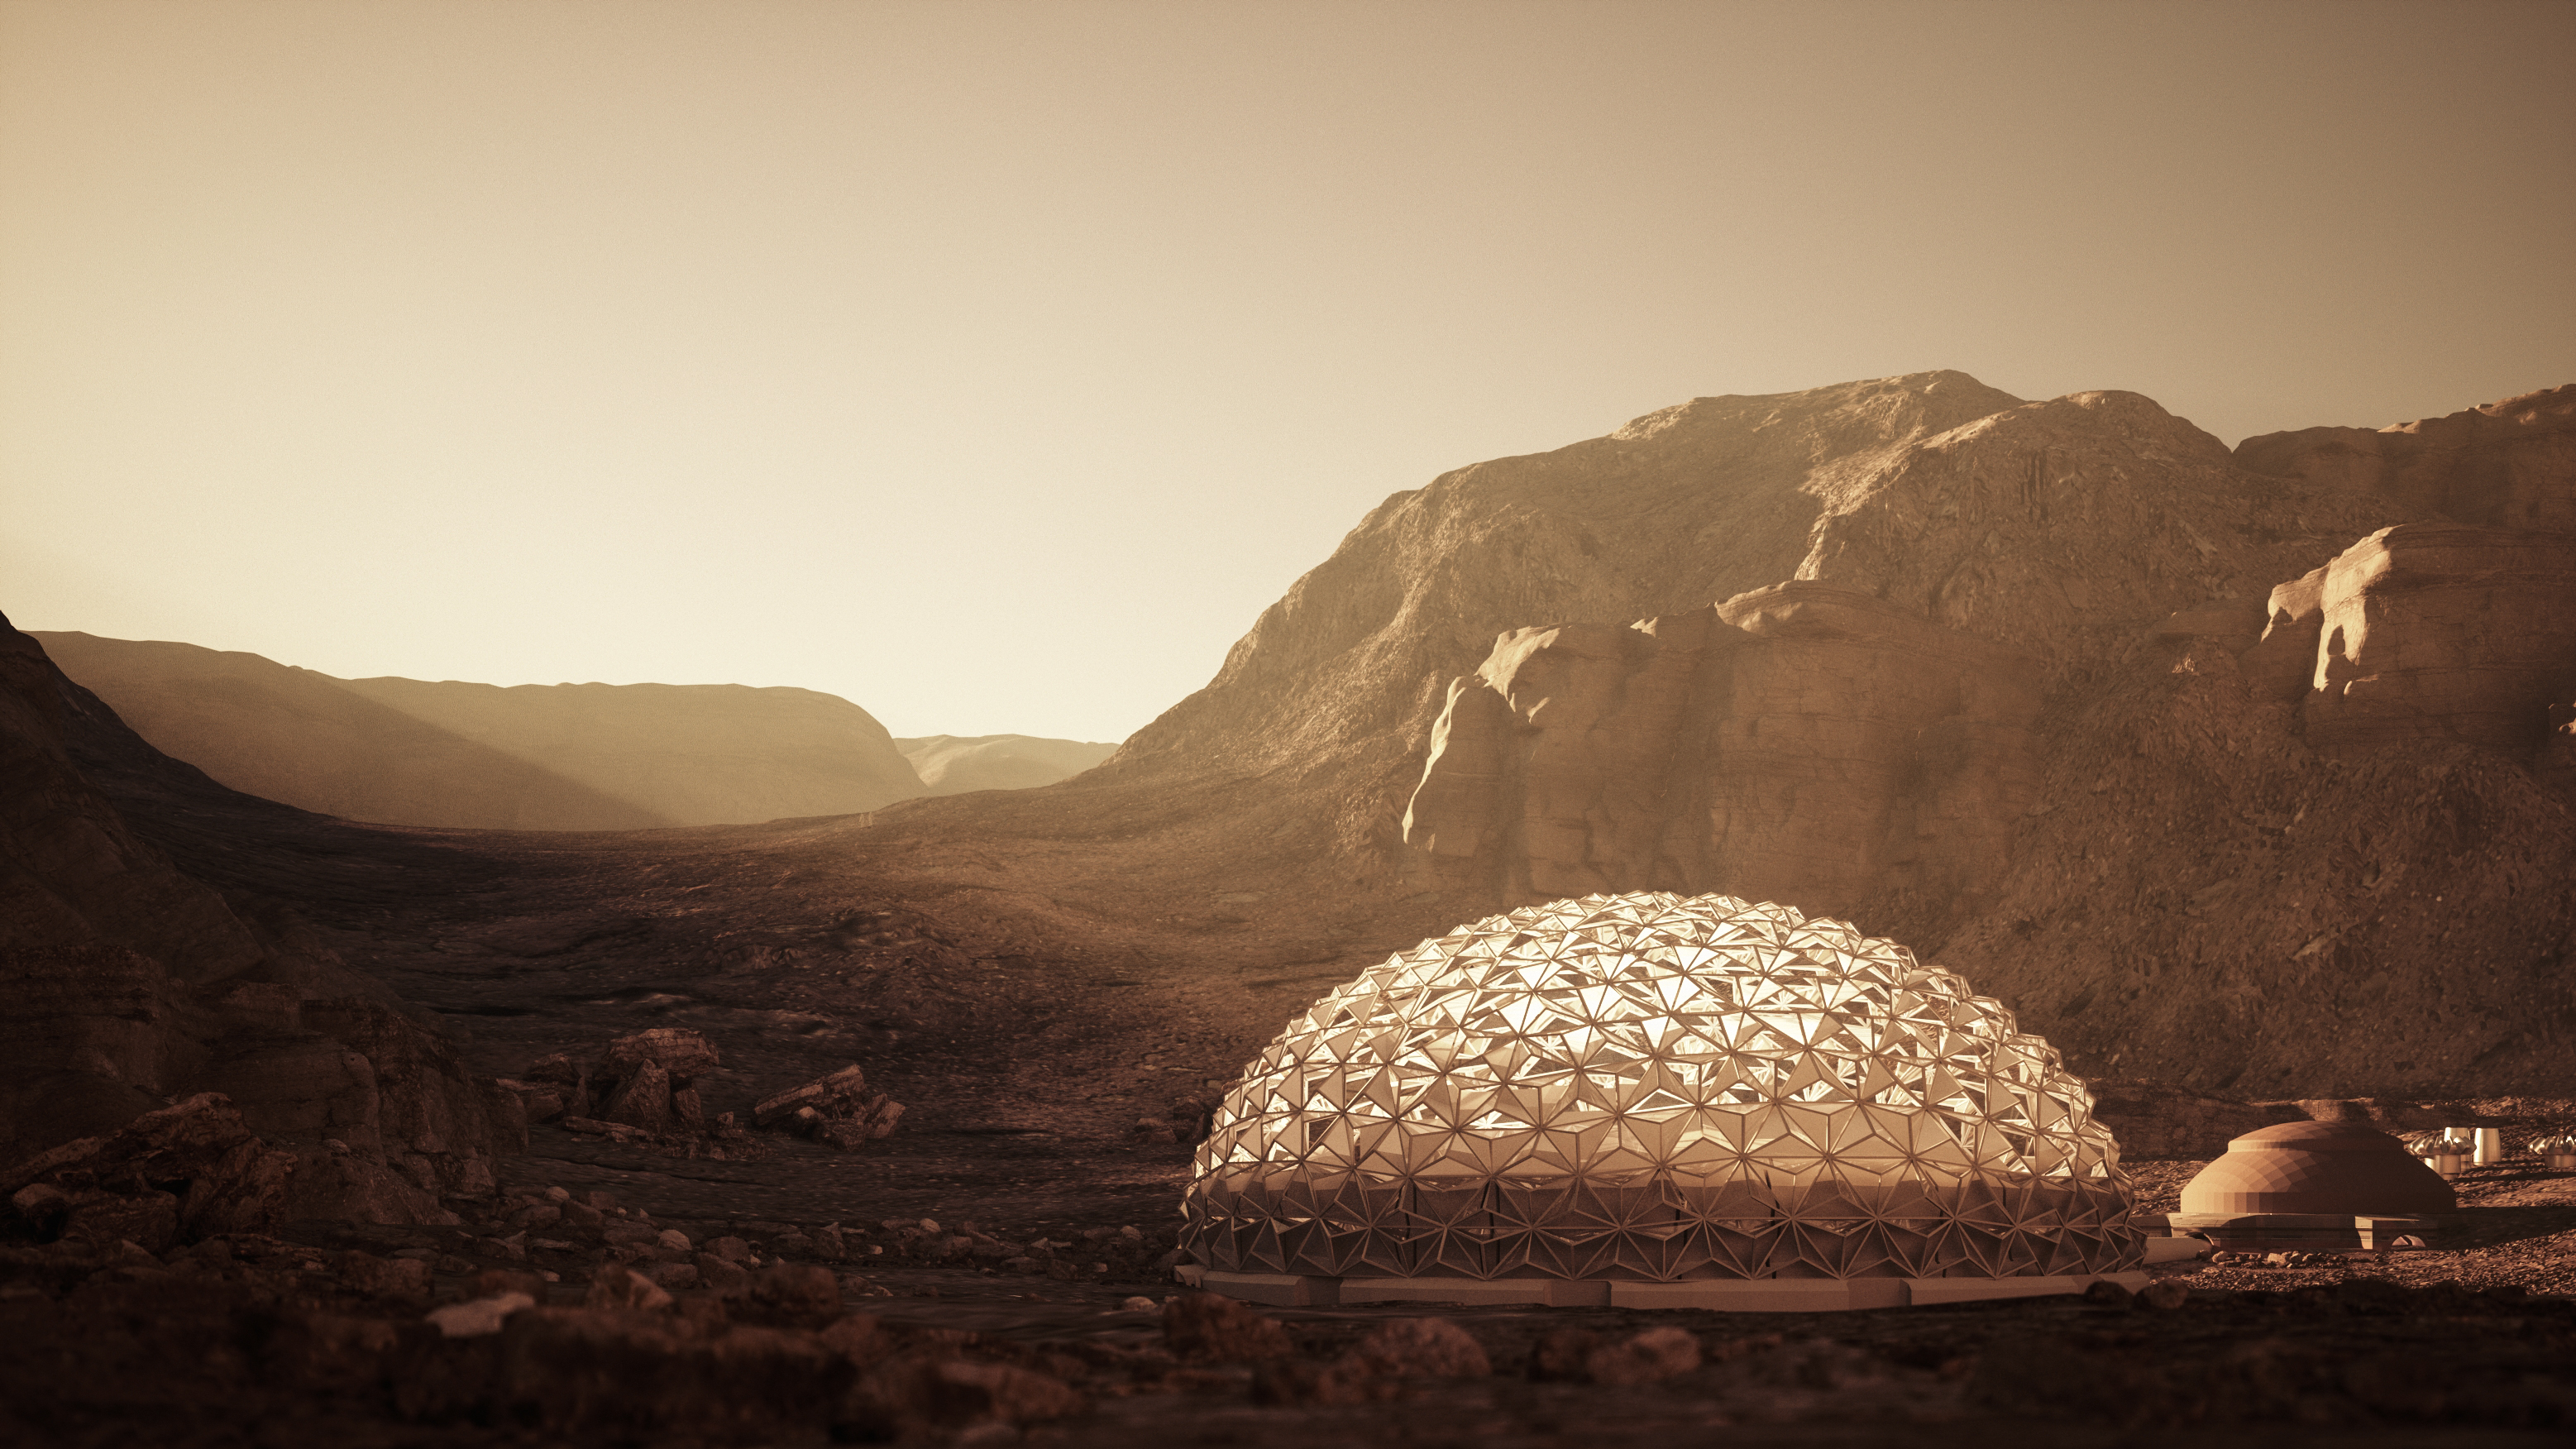 NÜWA, a new city on Mars